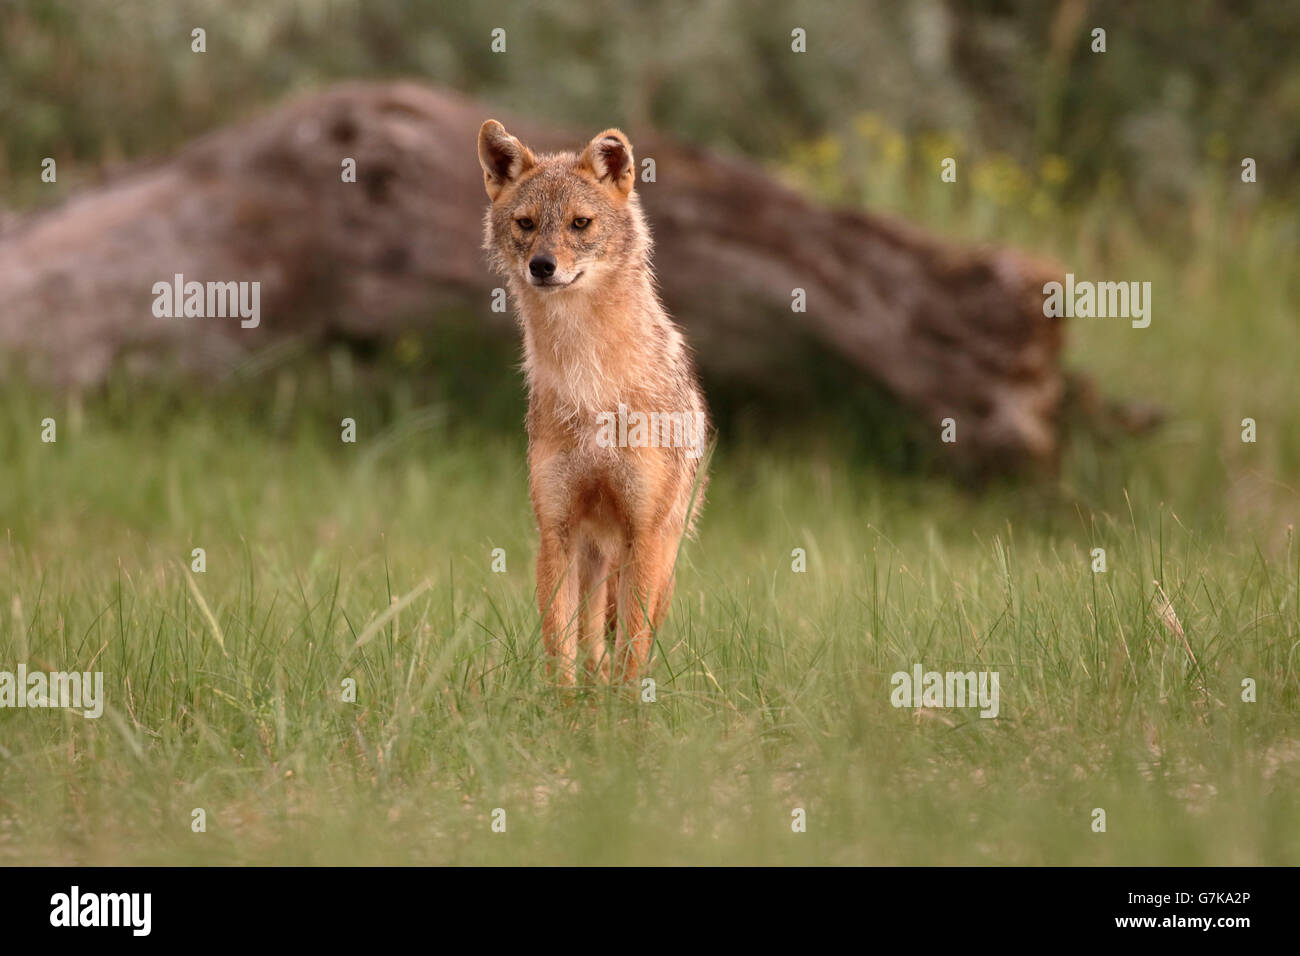 European jackal, Canis aureus moreoticus, Single mammal on grass, Romania, June 2016 Stock Photo